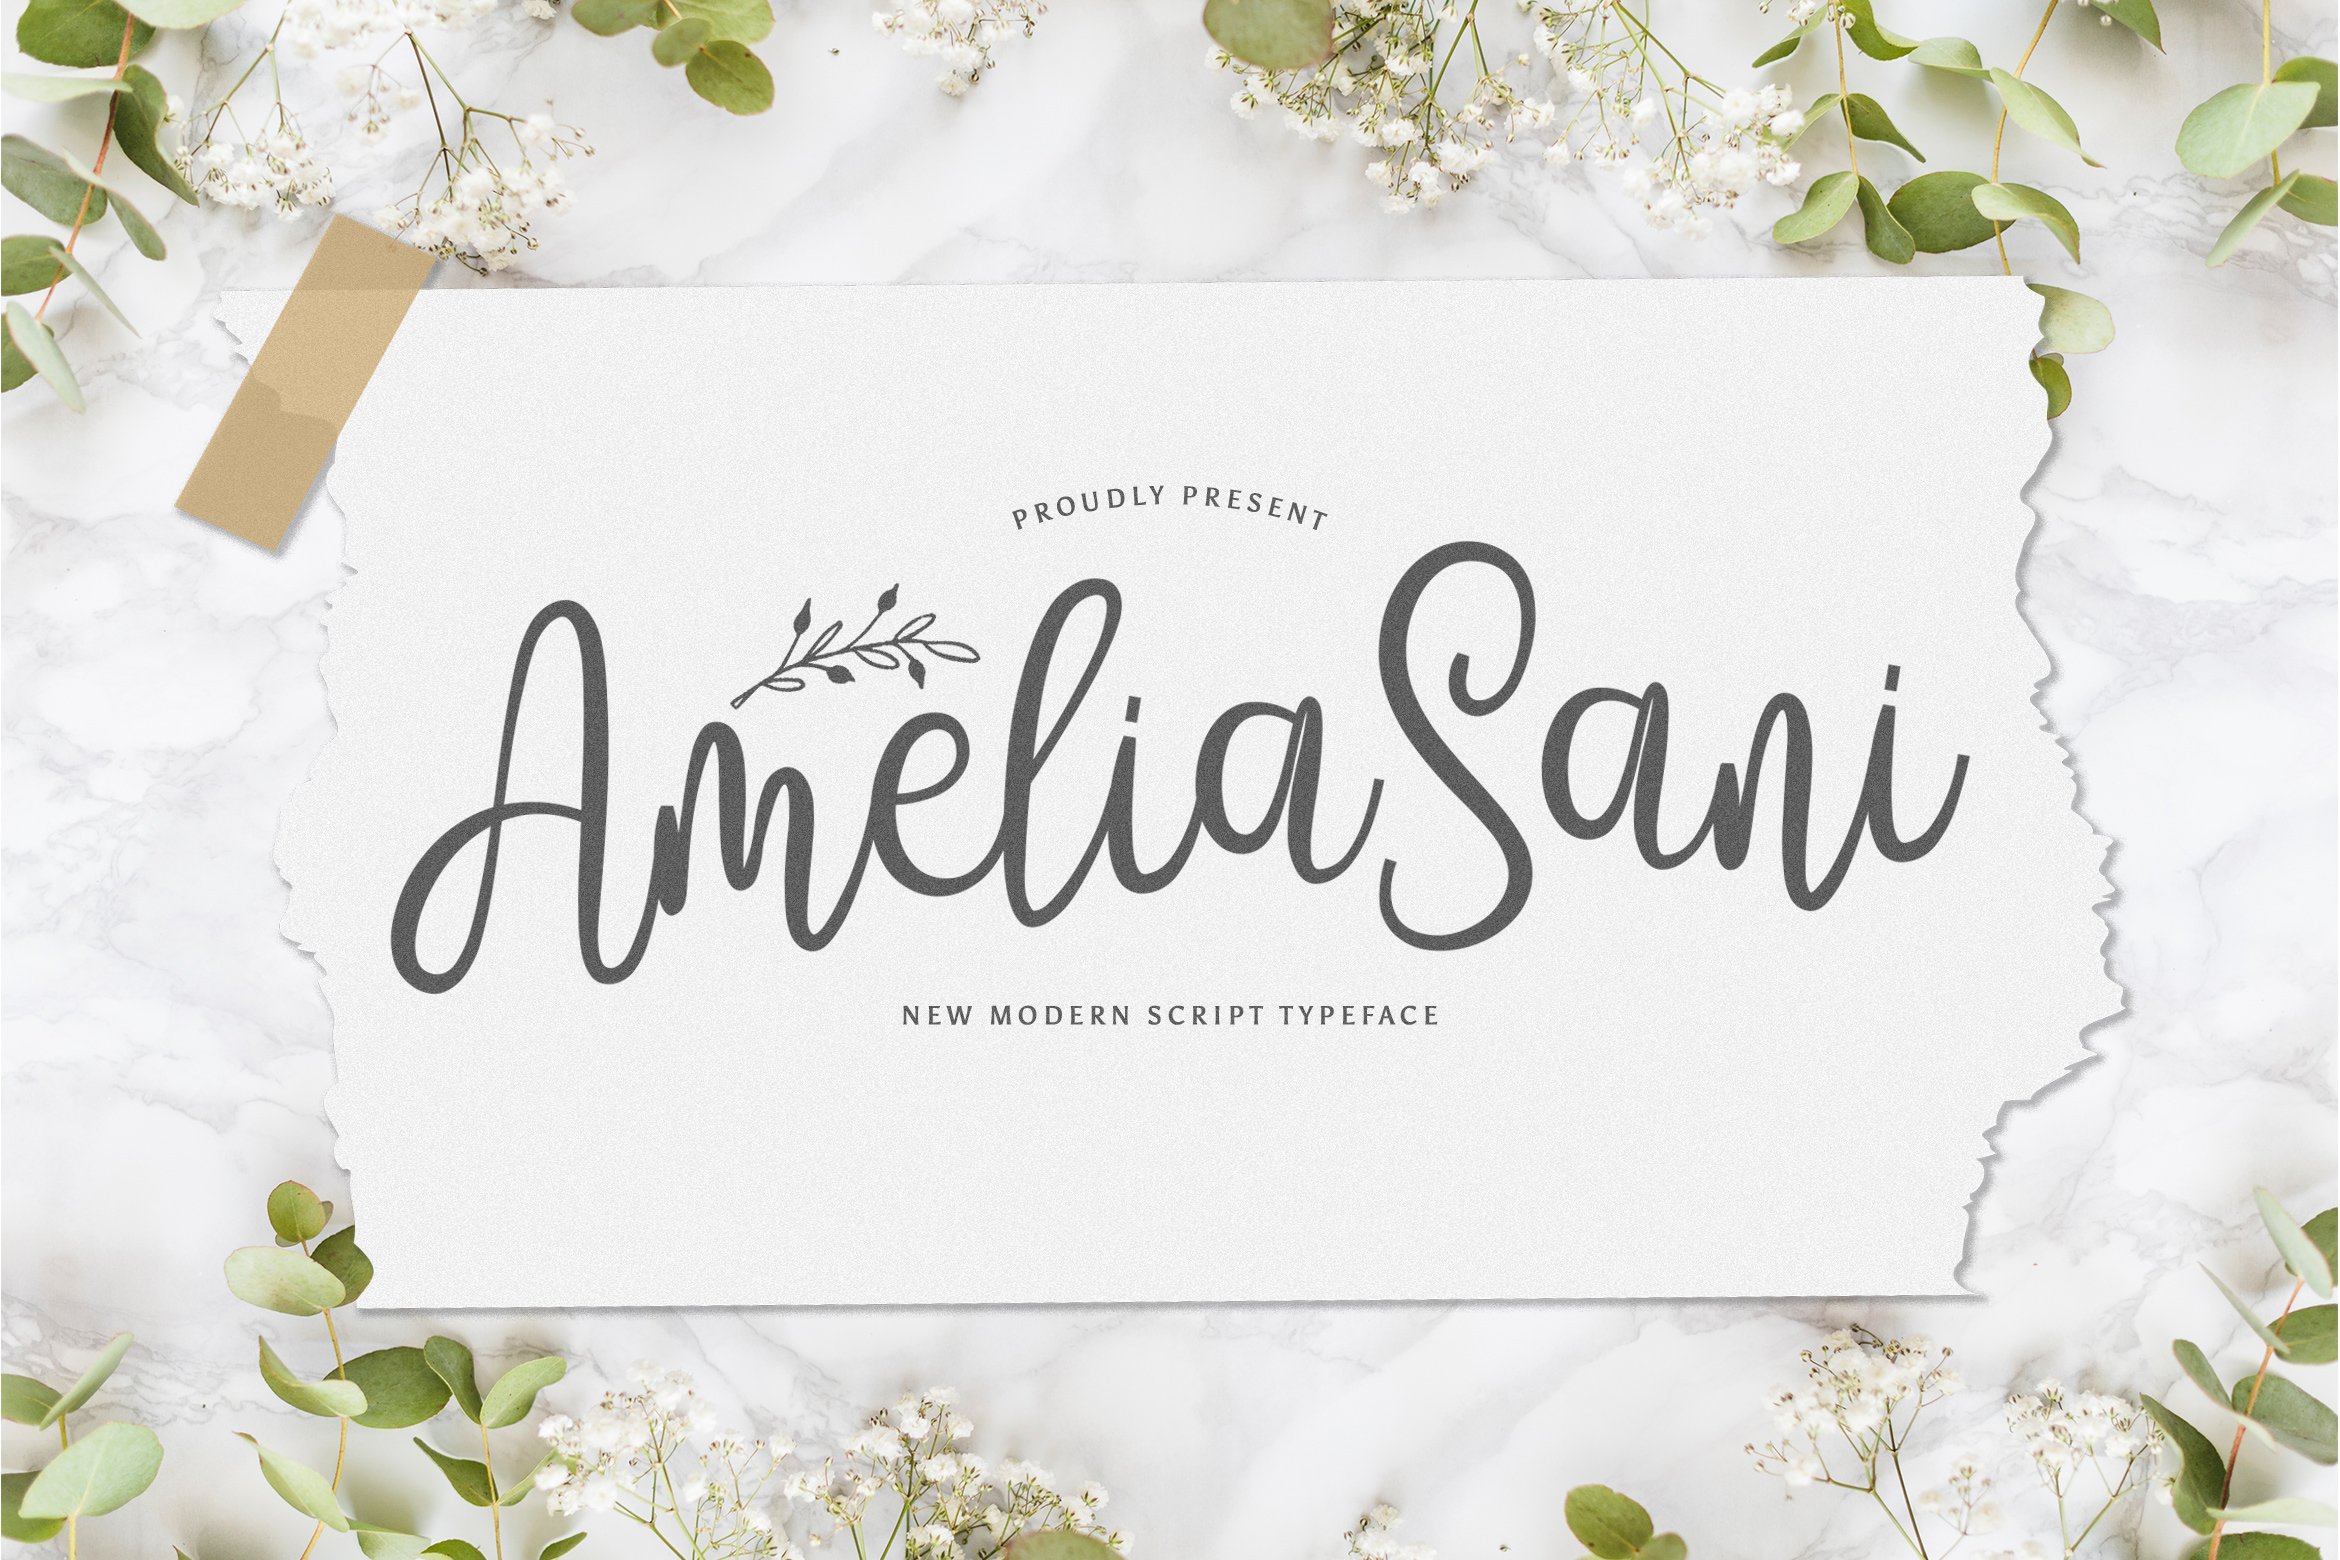 Amelia Sani - Handwritten Font cover image.